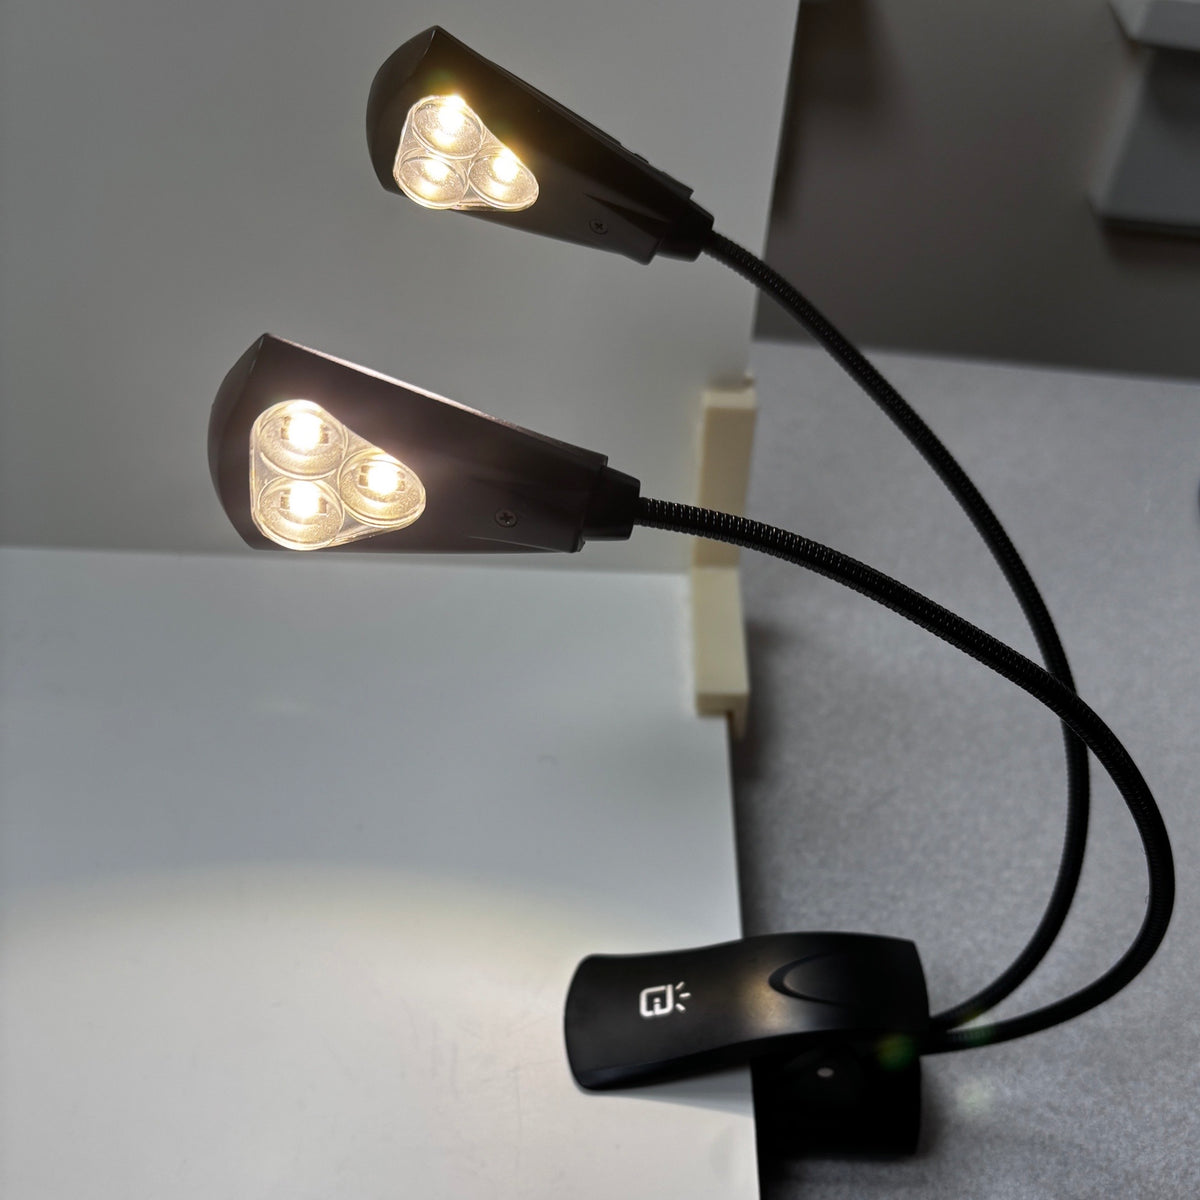 UltraBrite Dual Head 6-LED Clip Anywhere Music light - Flexible Gooseneck Style